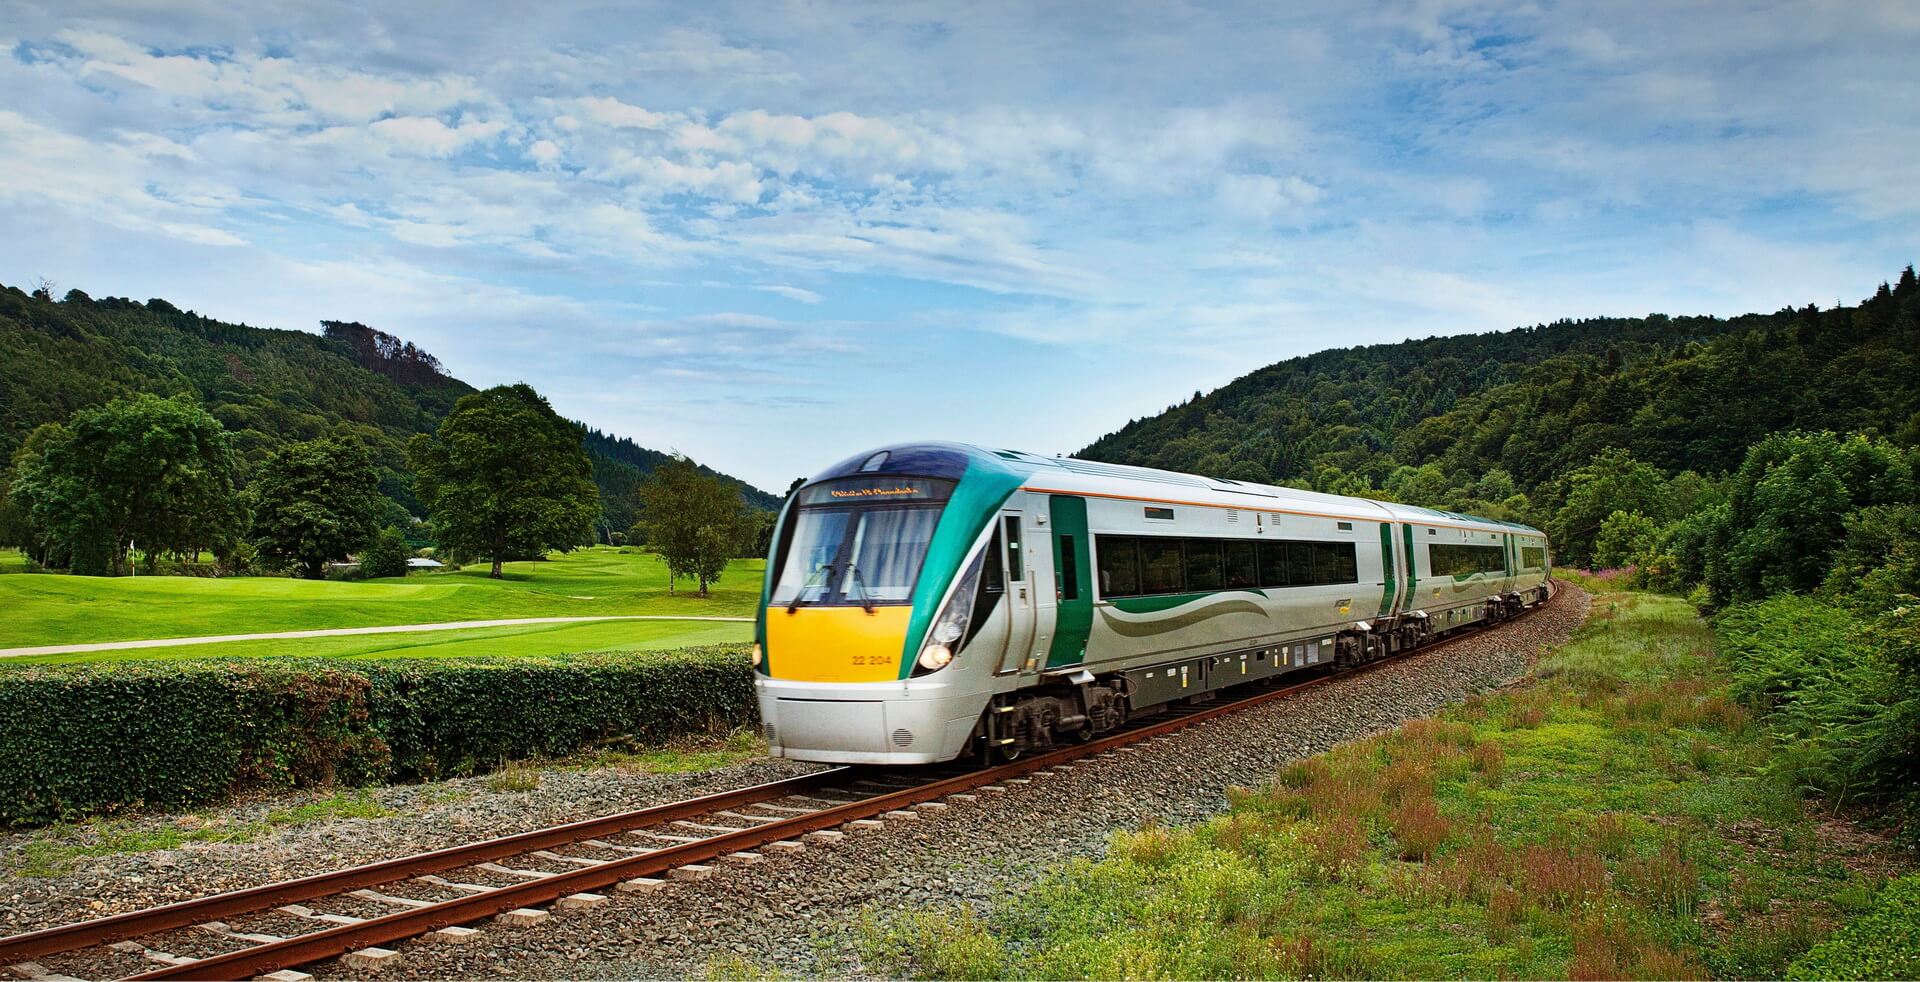 Ирландская железная дорога купит 600 элеткропоездов на аккумуляторных батареях на €2 млрд